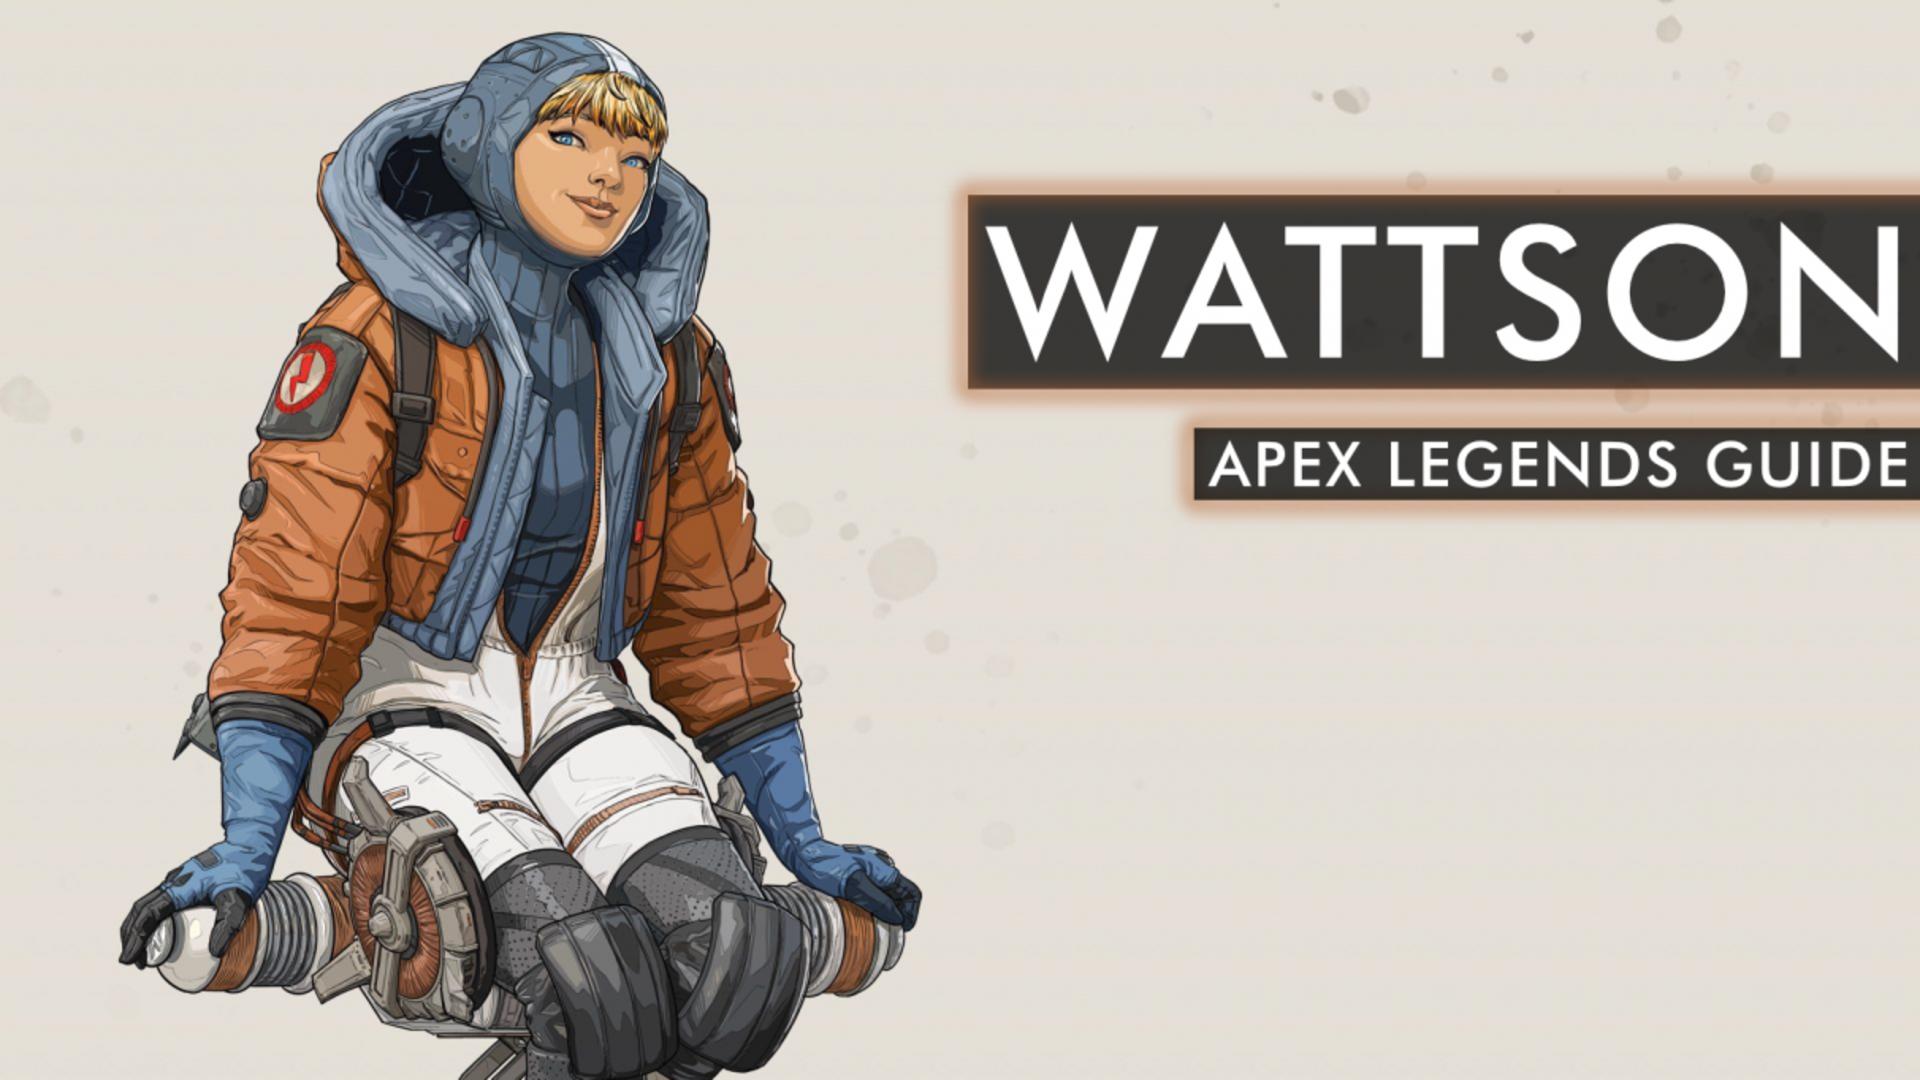 Apex Legends Wattson guide: Wattson tips and tricks, abilities